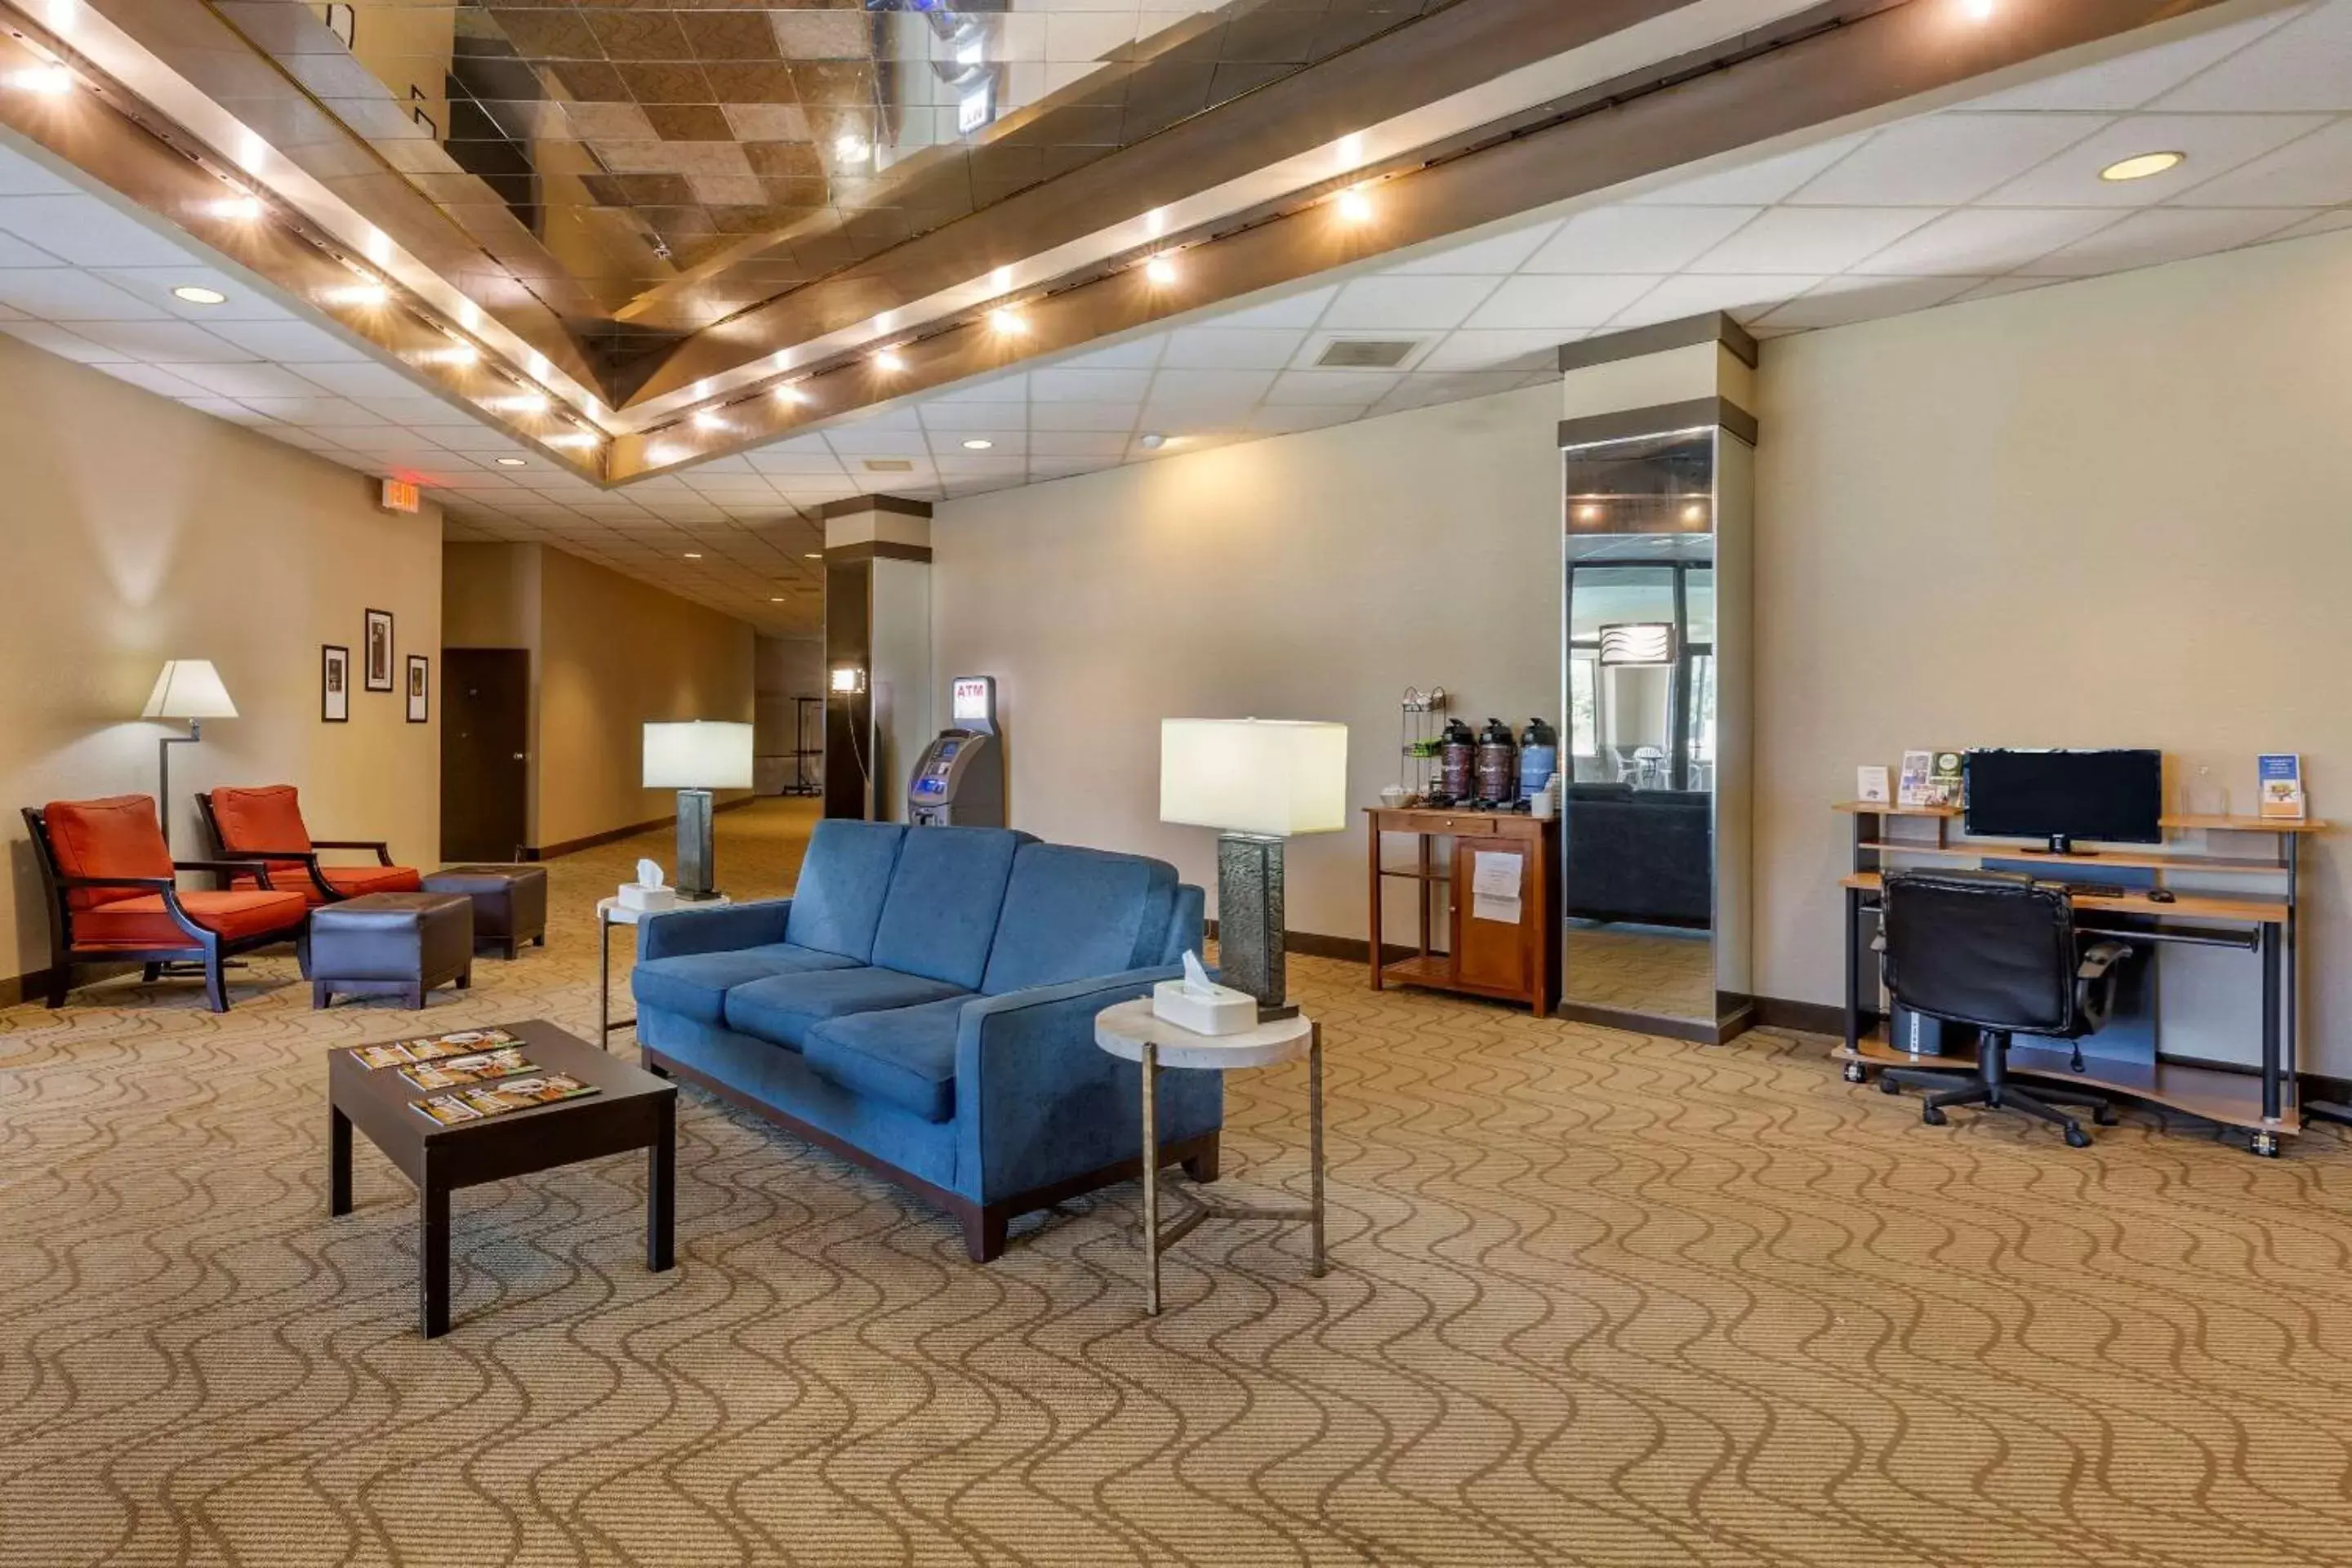 Lobby or reception in Comfort Inn Alliance